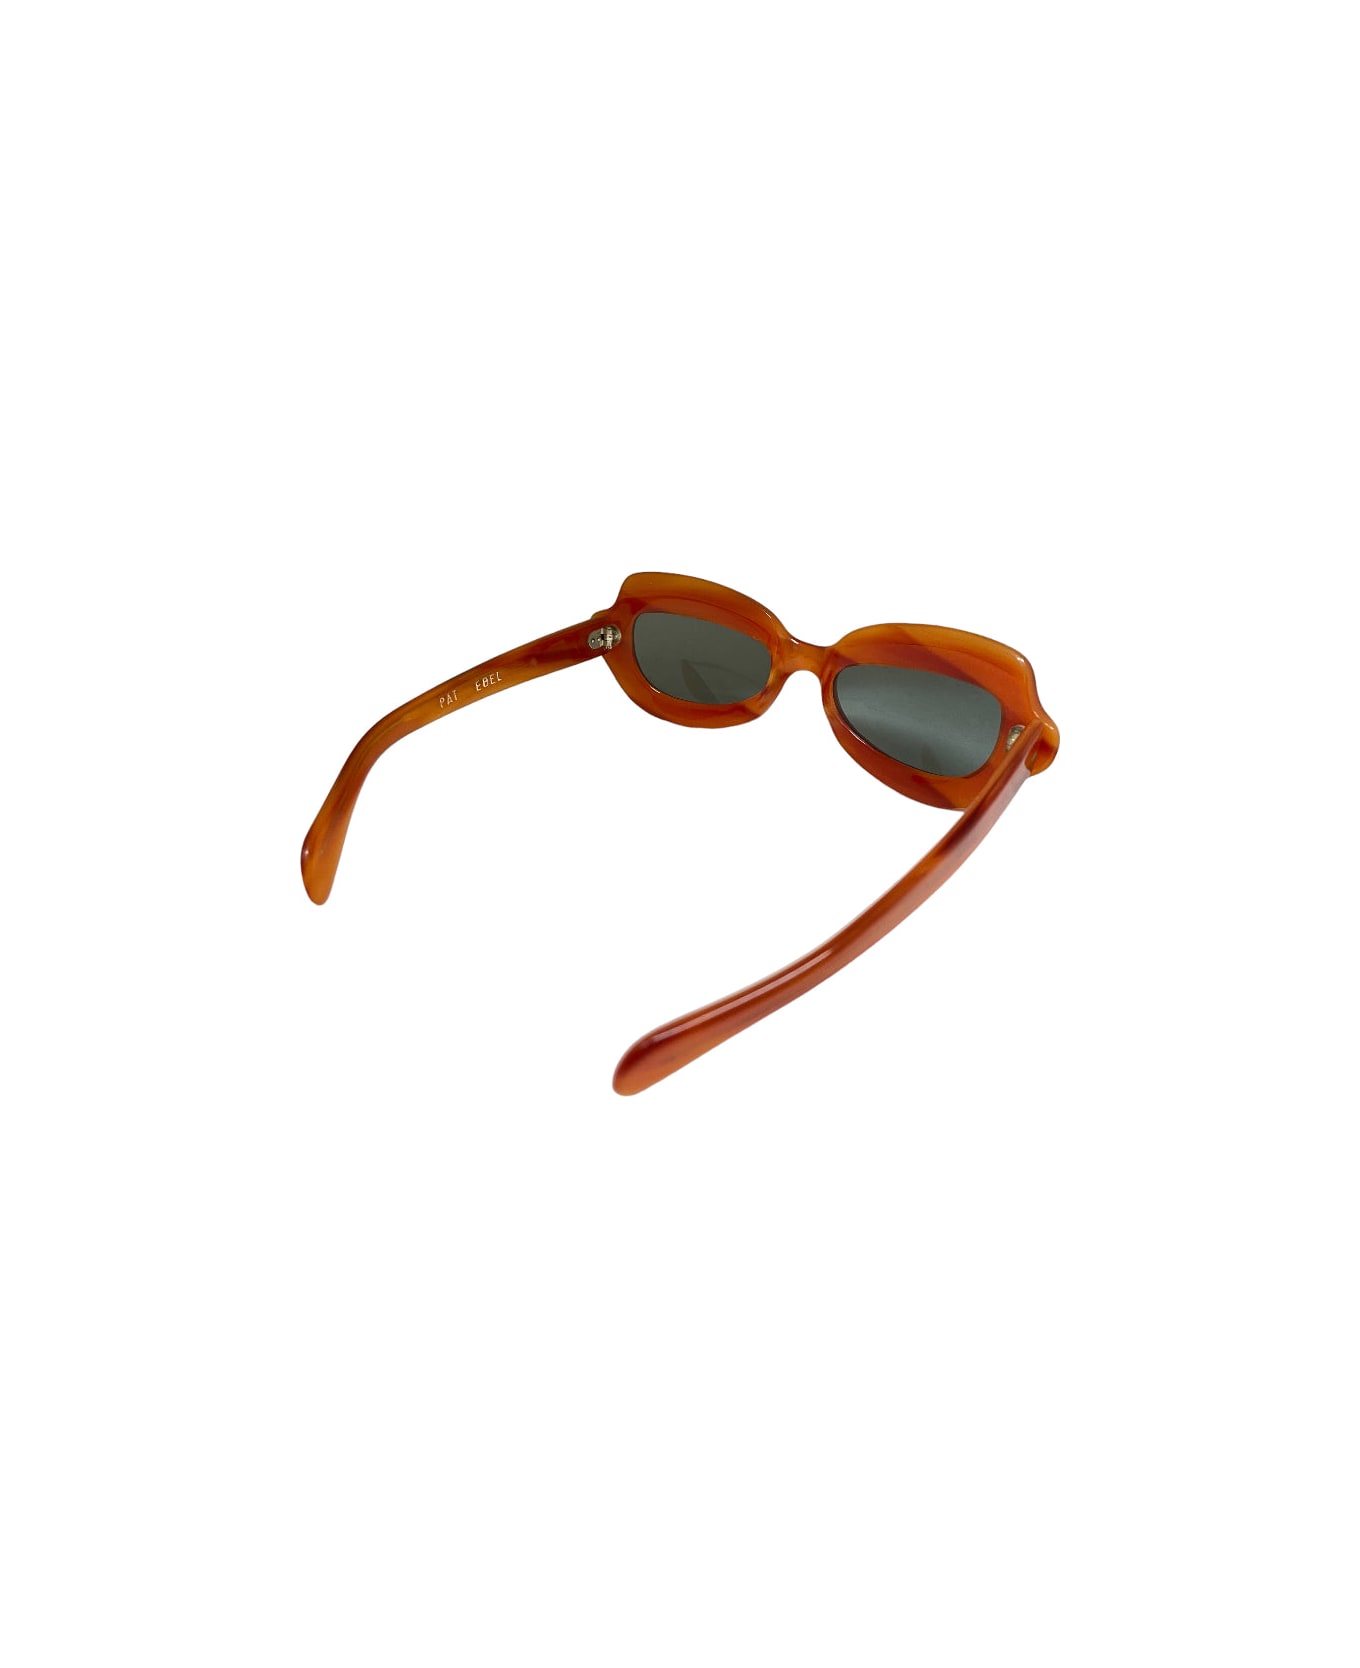 Serengeti Eyewear Pat Ebel - Light Havana Sunglasses